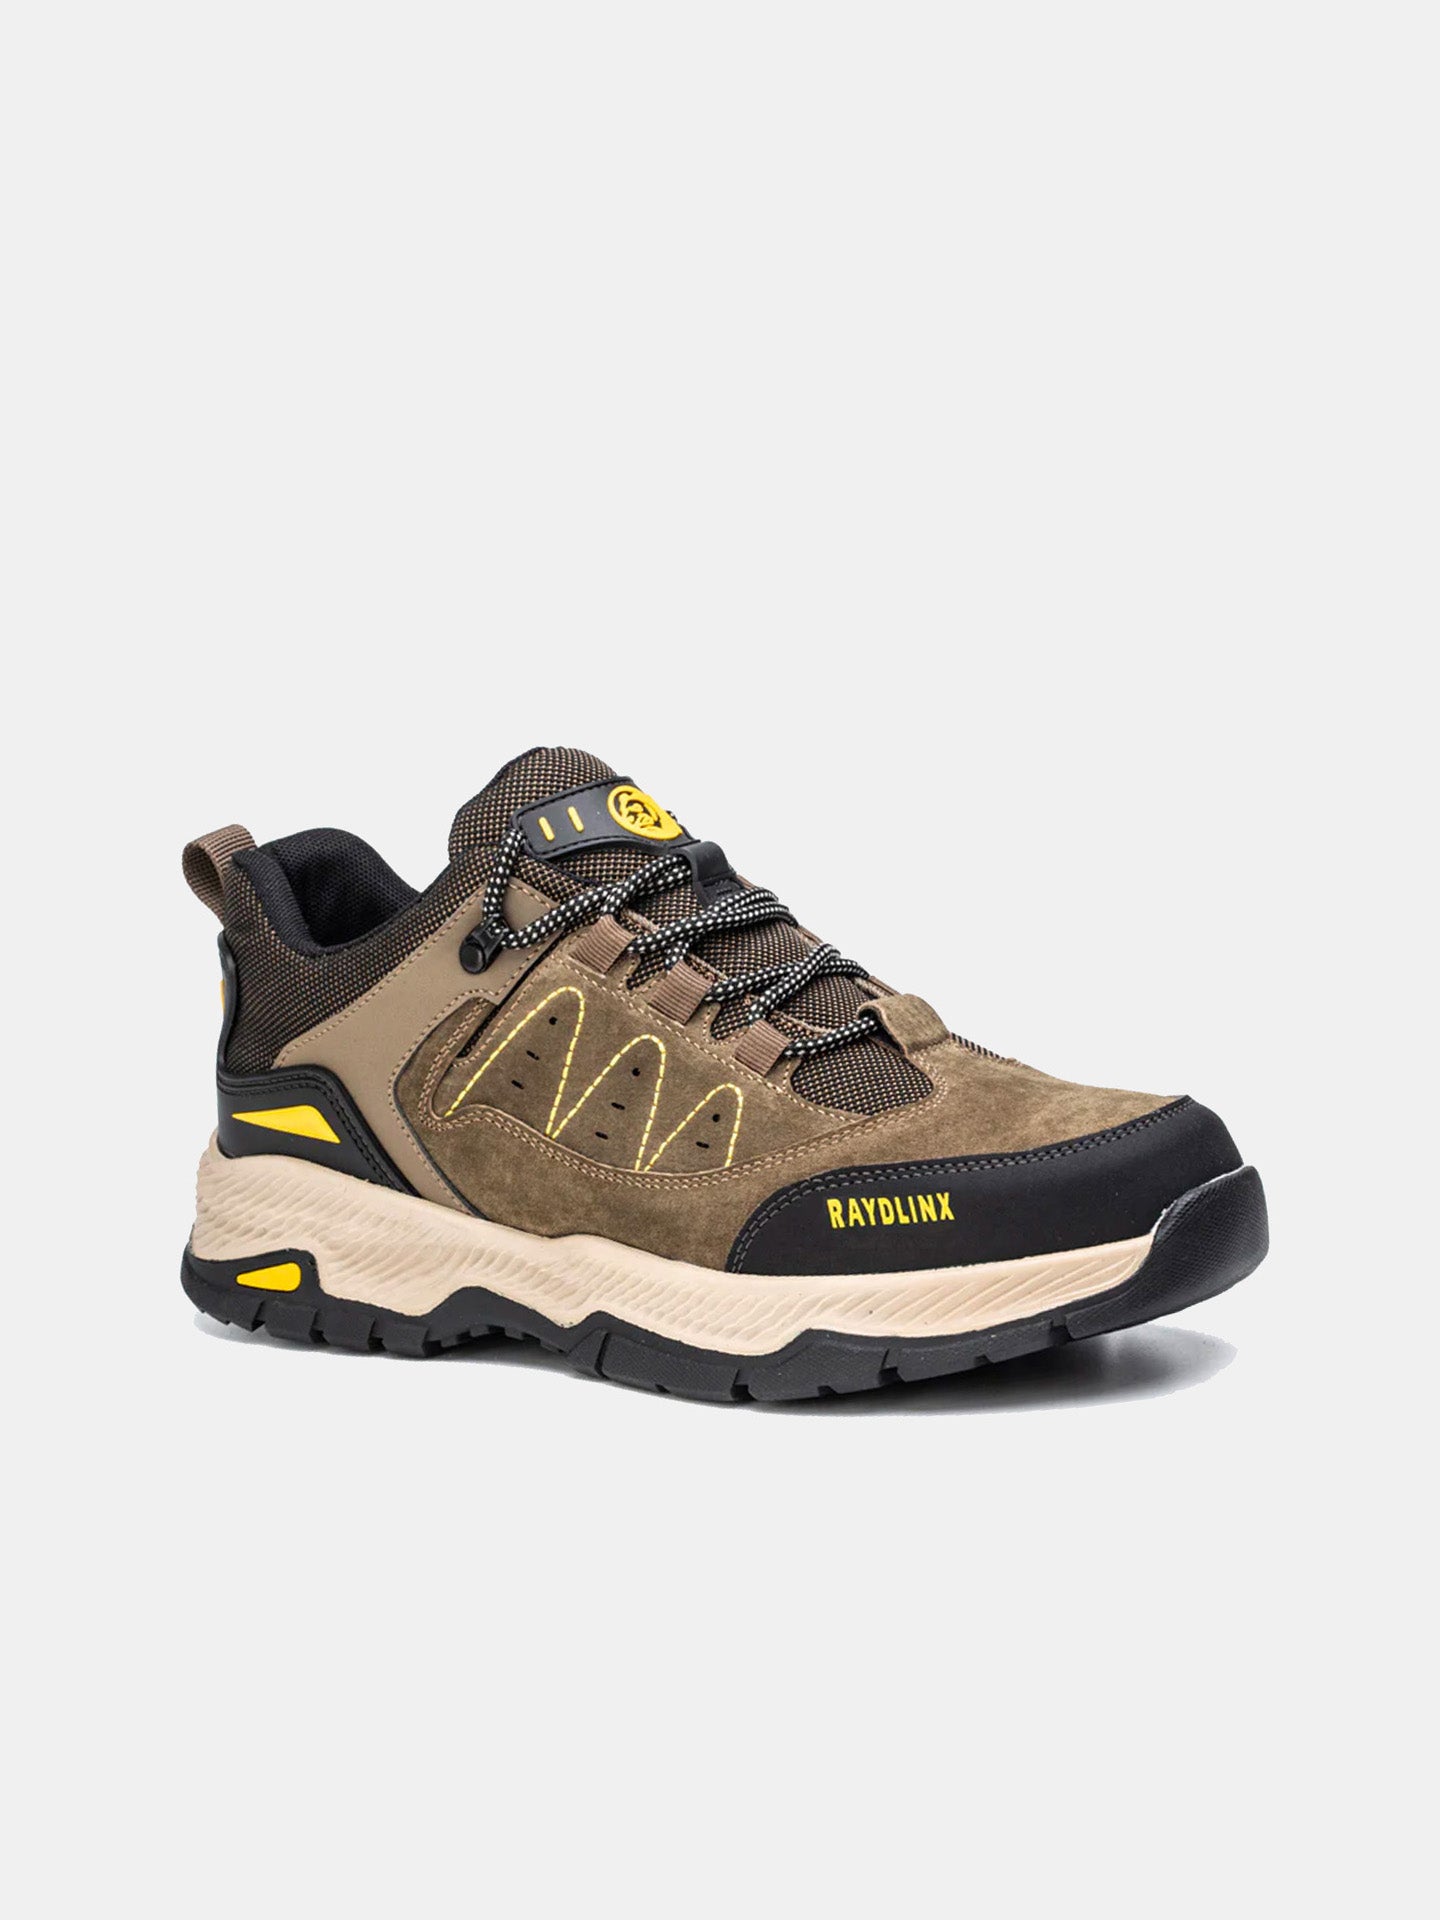 Raydlinx Men's Mountain Hiking Walking Shoes #color_Grey